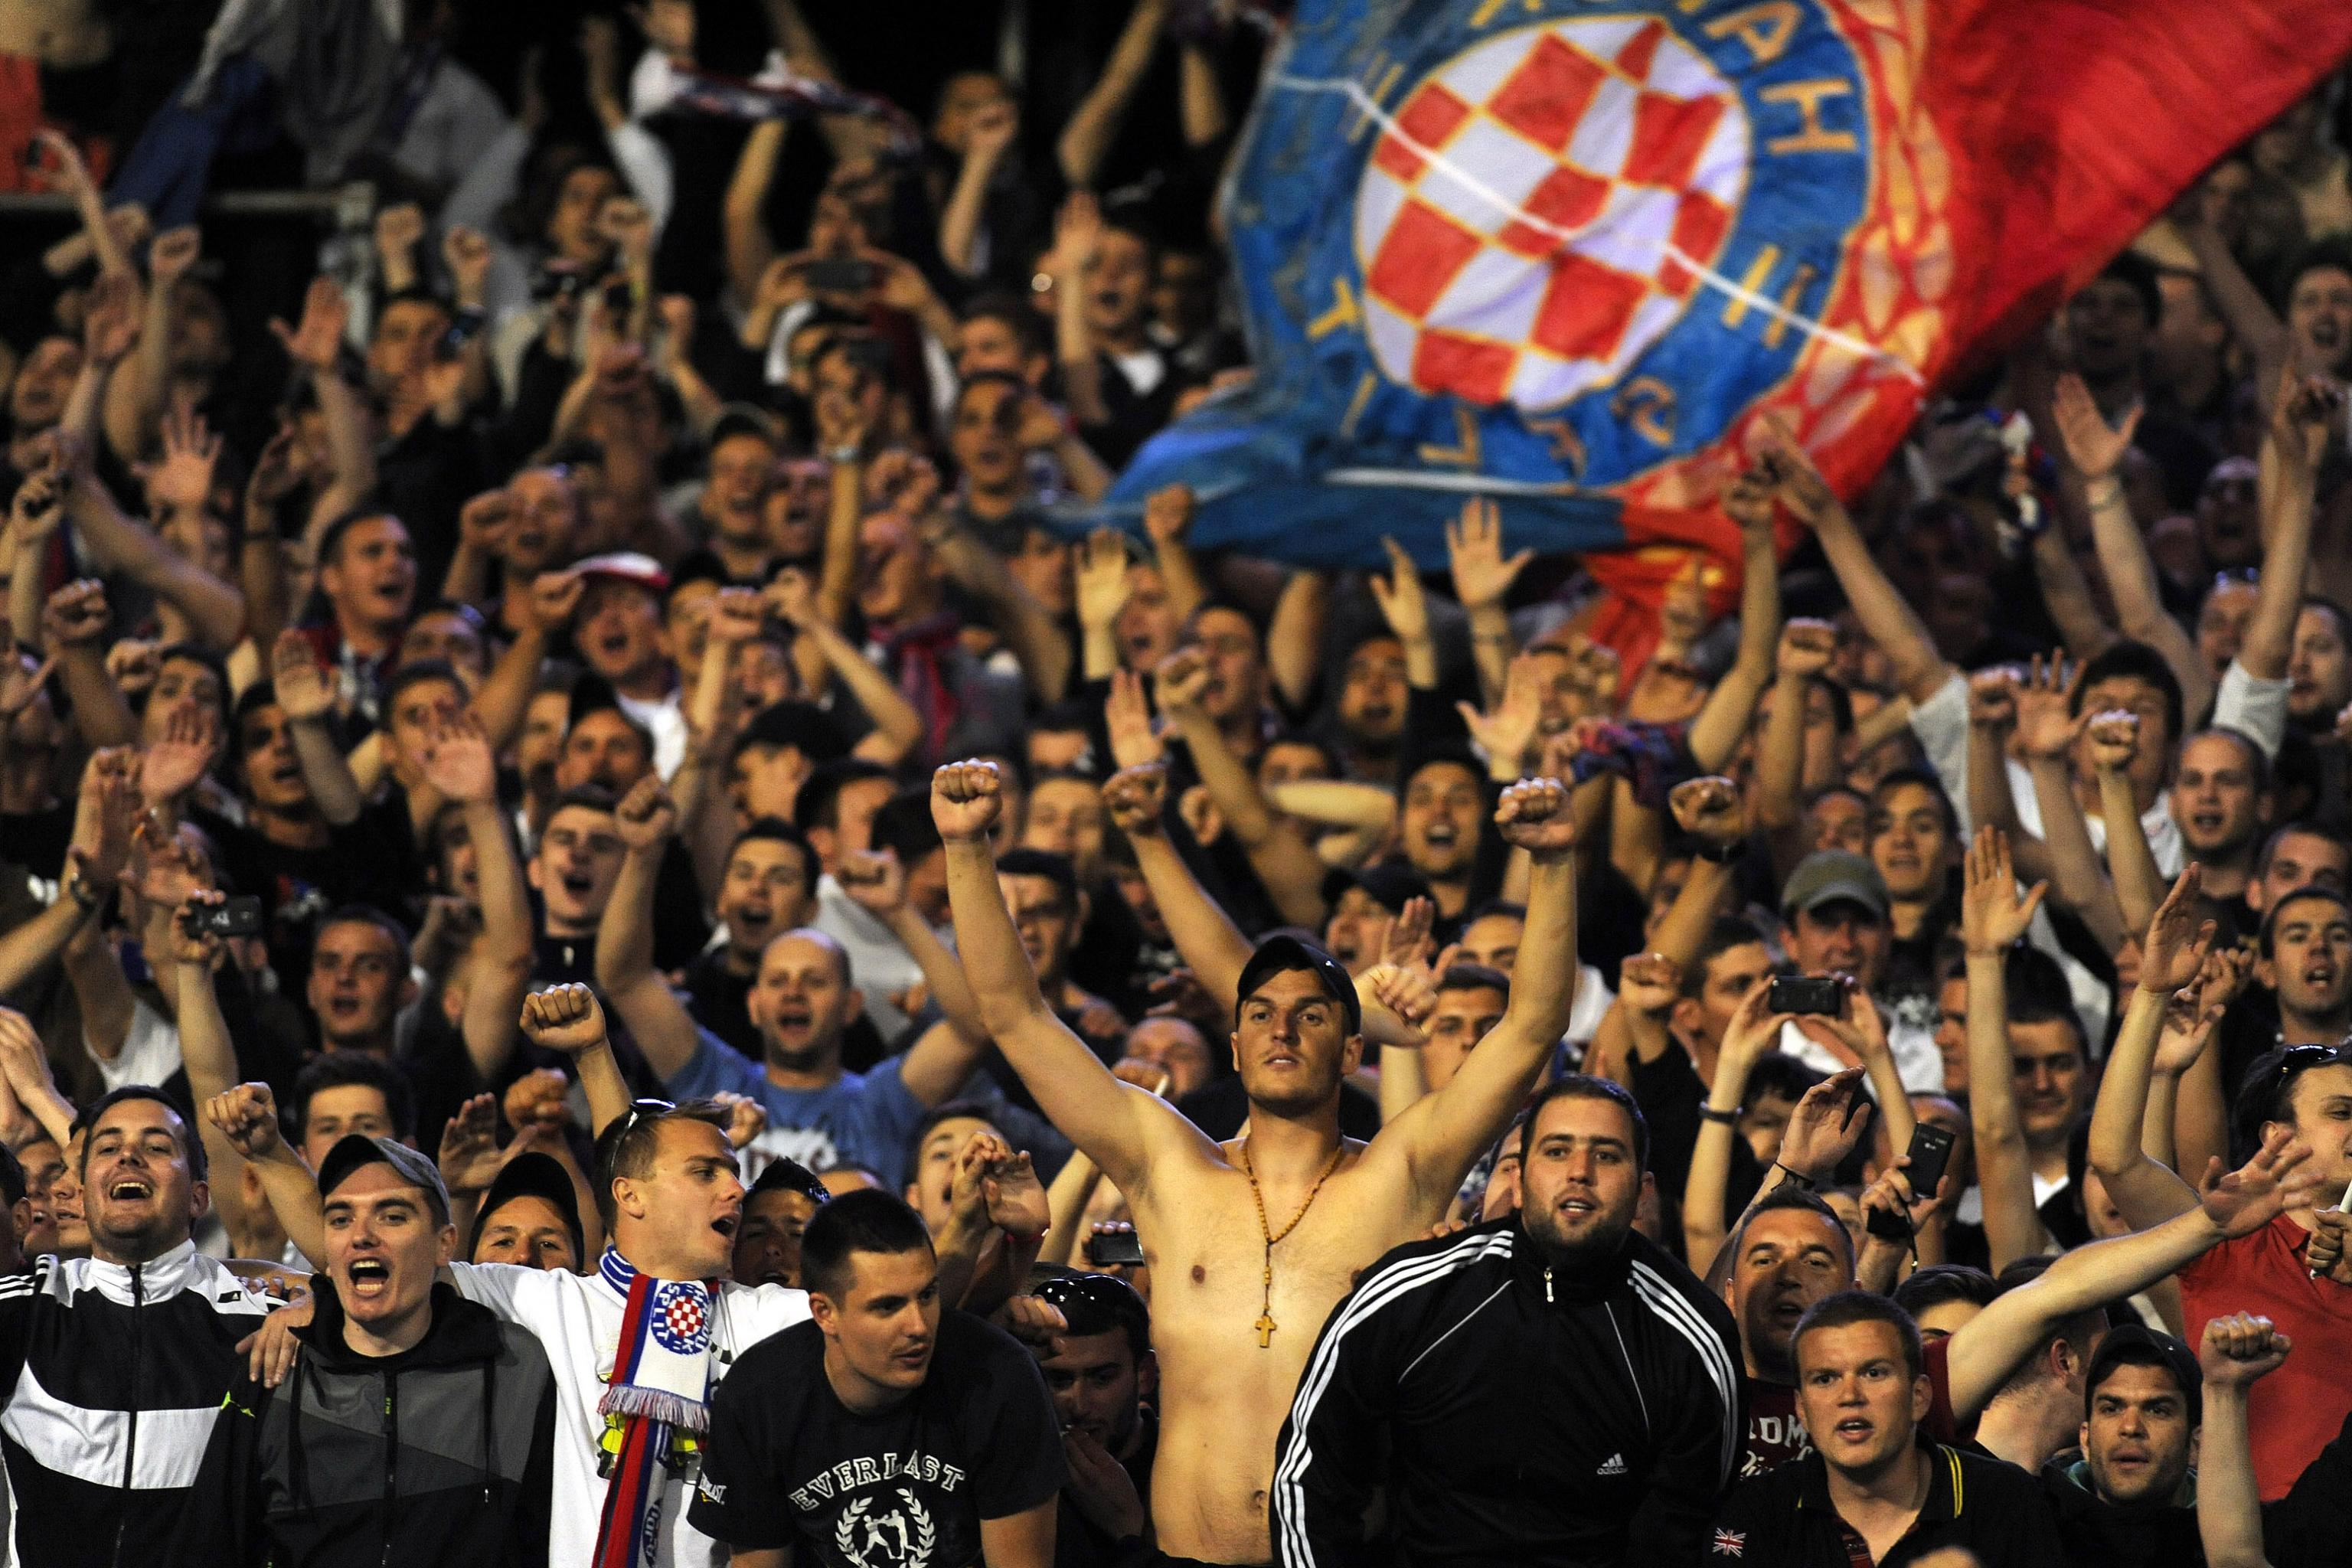 Highlights from Hadjuk Split vs. PAOK - PAOKFC